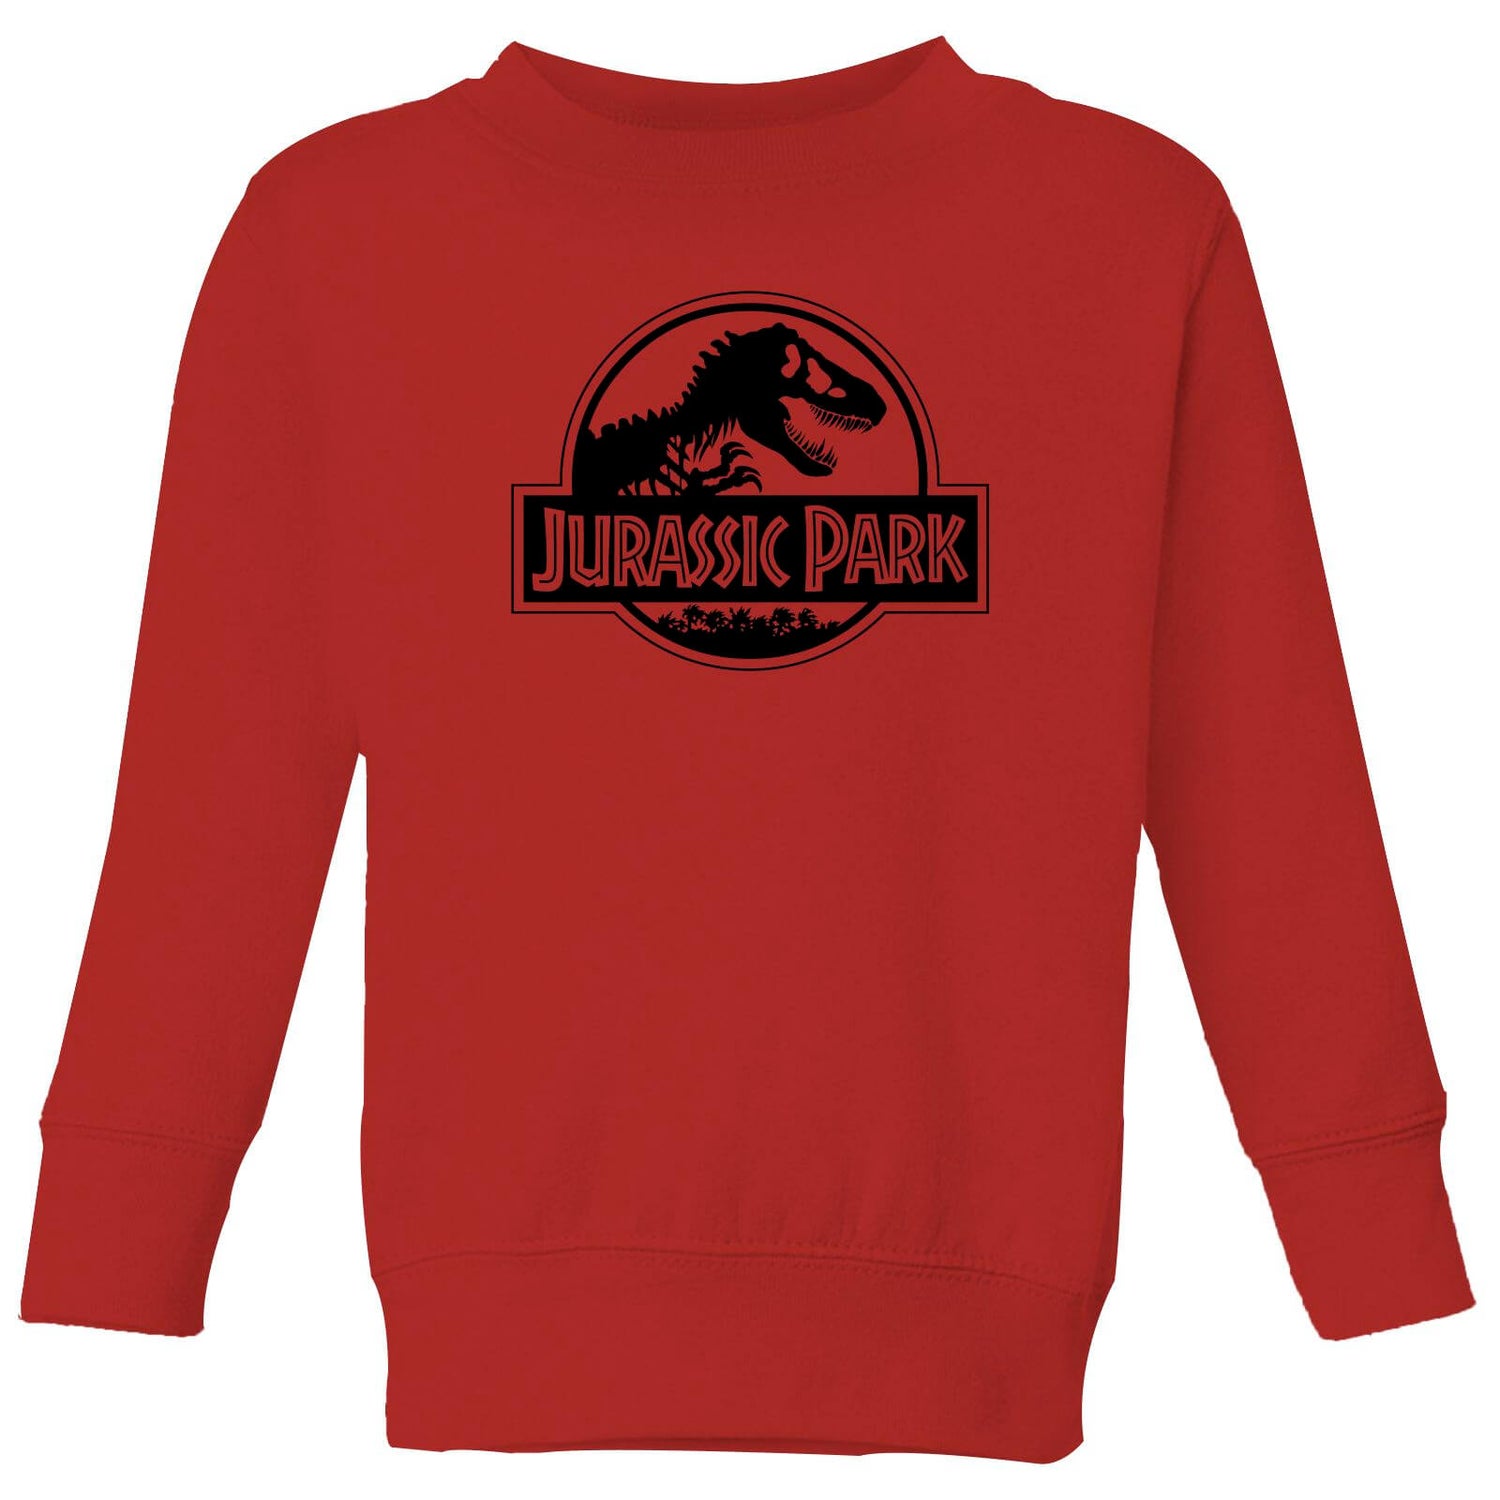 Jurassic Park Logo Kids' Sweatshirt - Red